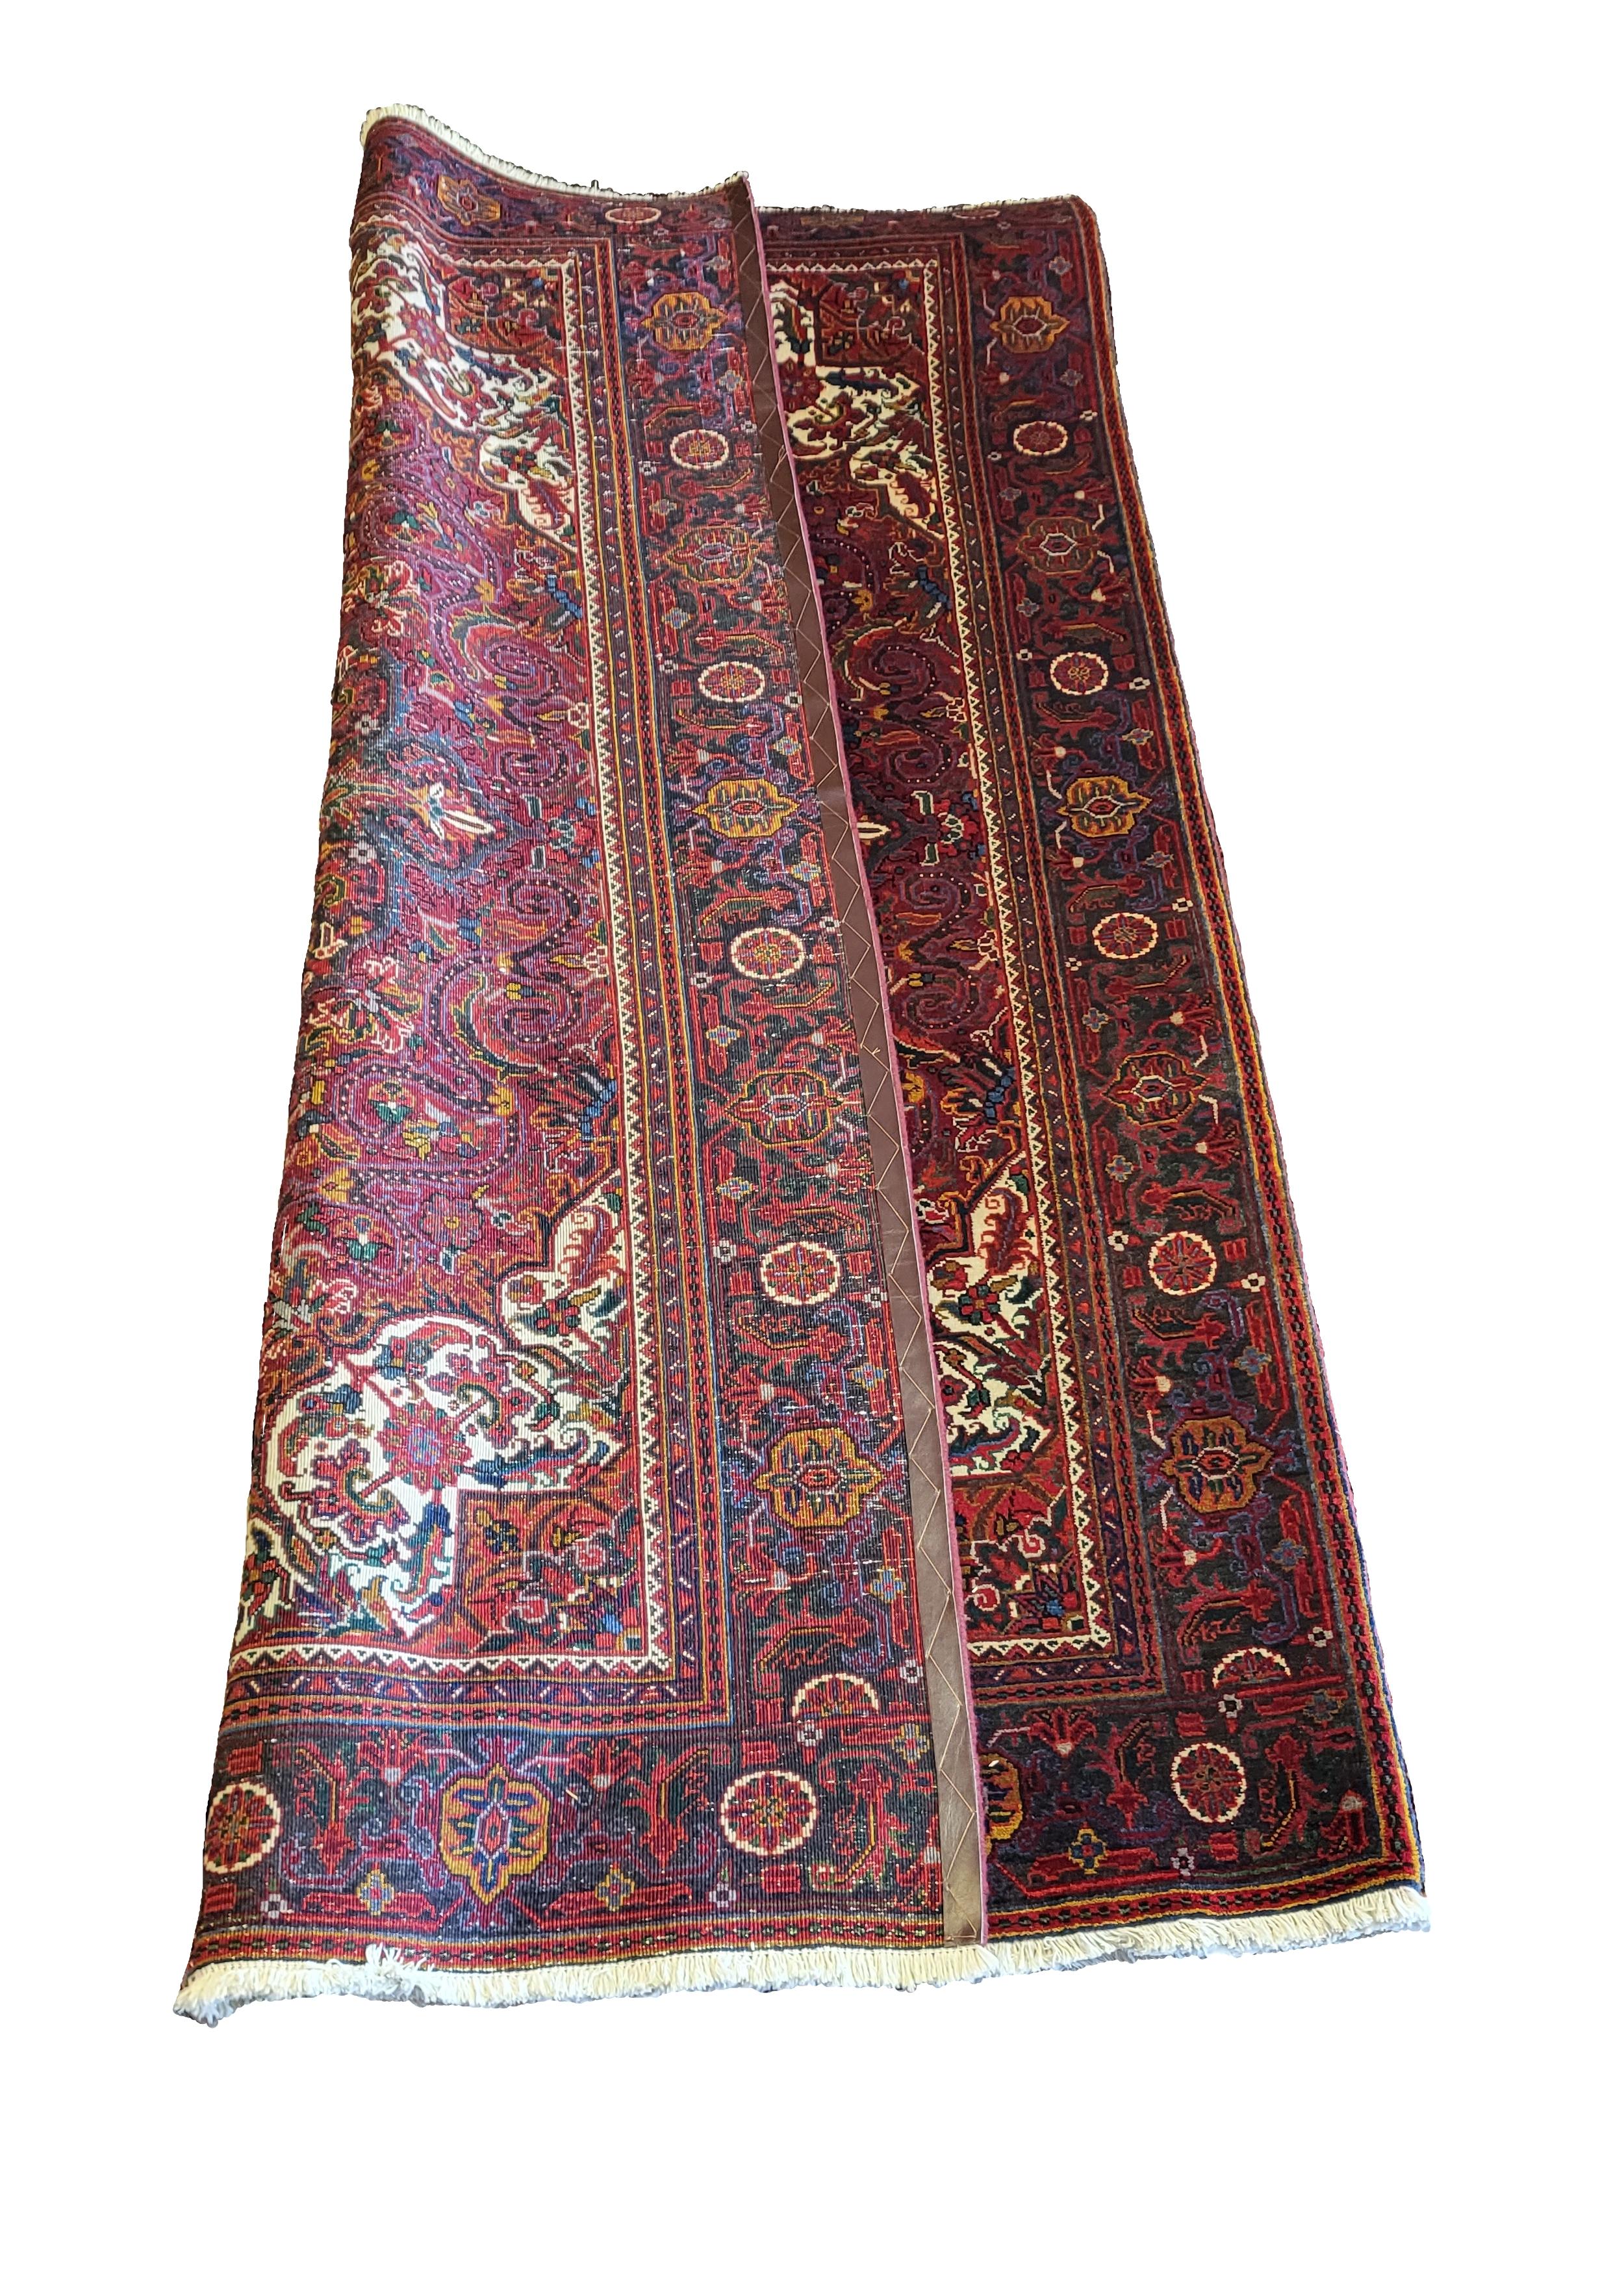 Immaculate 60's Shiravian Heriz - Persian Tribal Serapi

6' 5